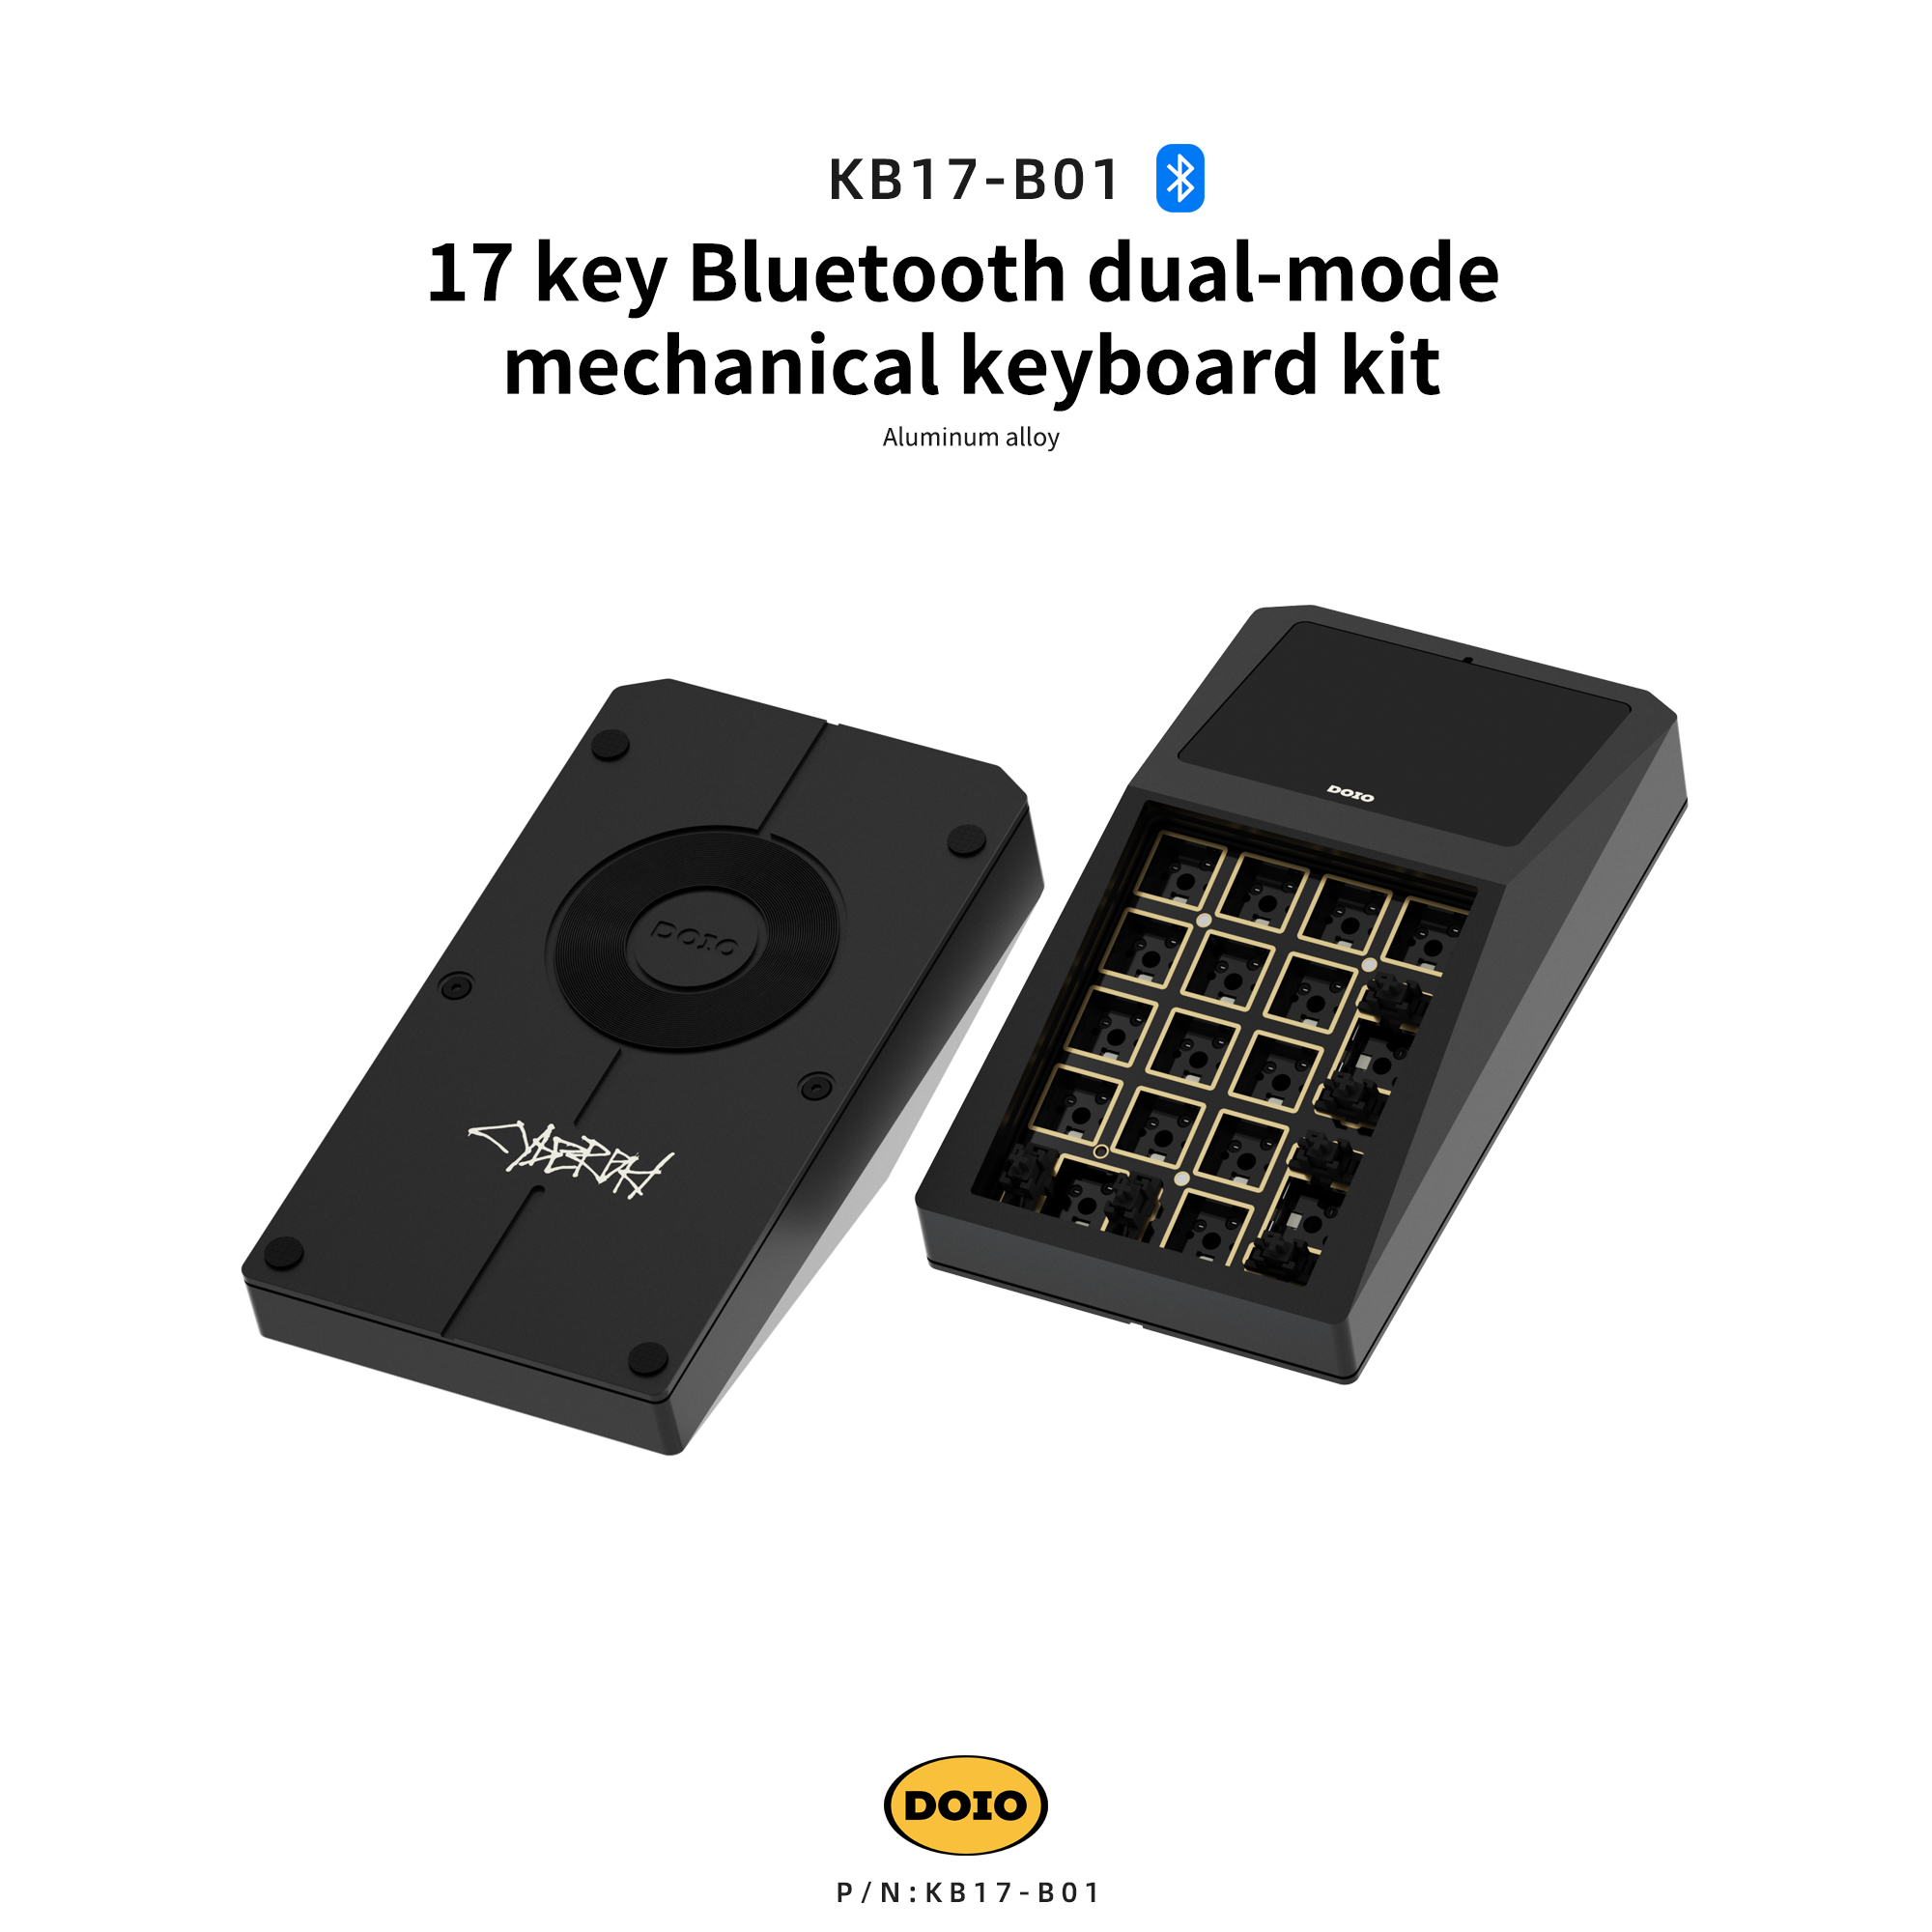 17 key Bluetooth dual-mode mechanical keyboard kit-